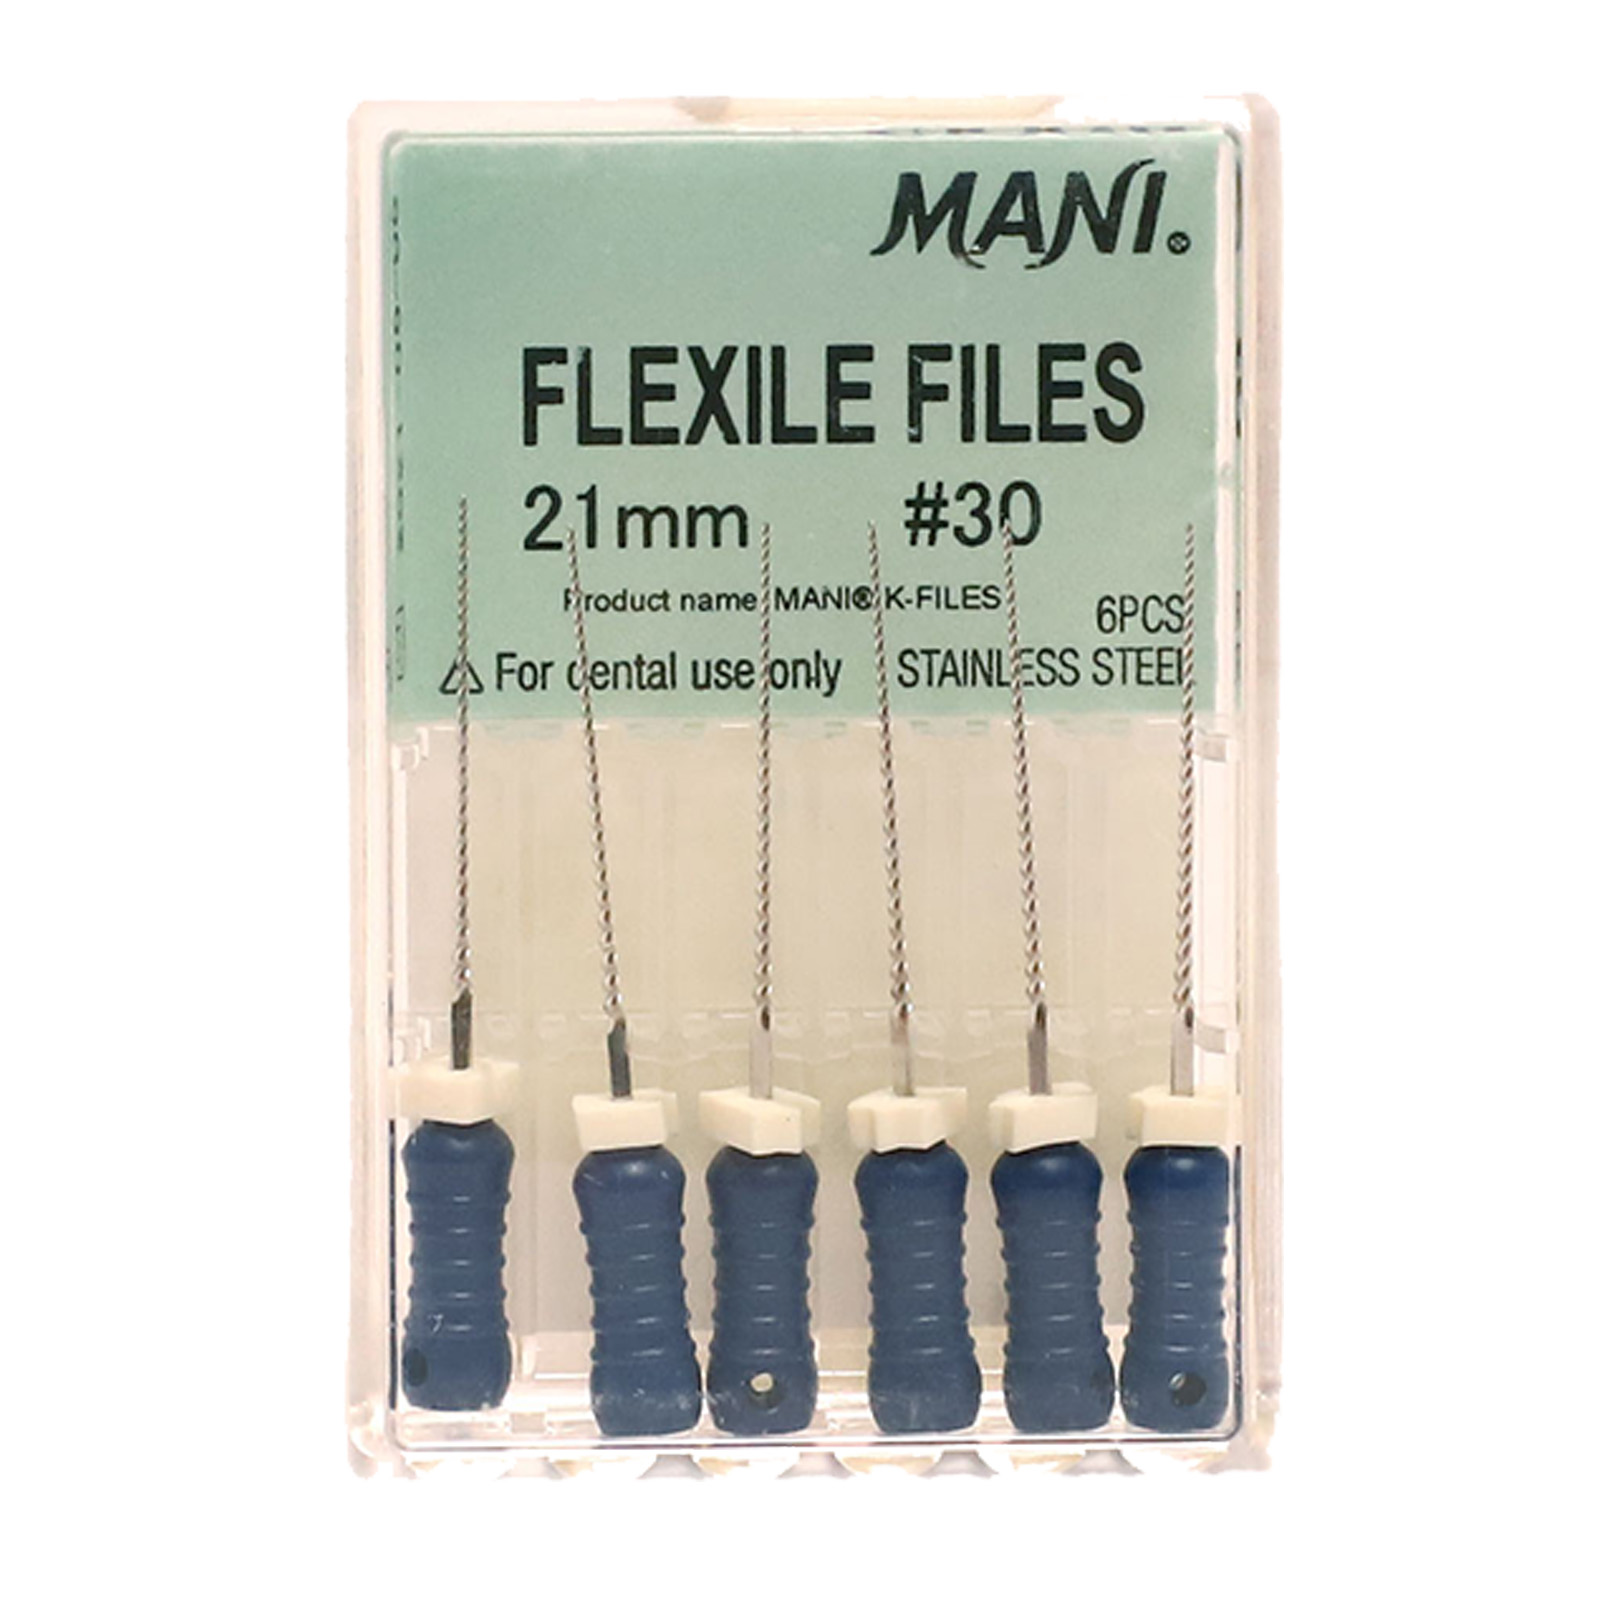 Mani Flexi Files 21mm #30